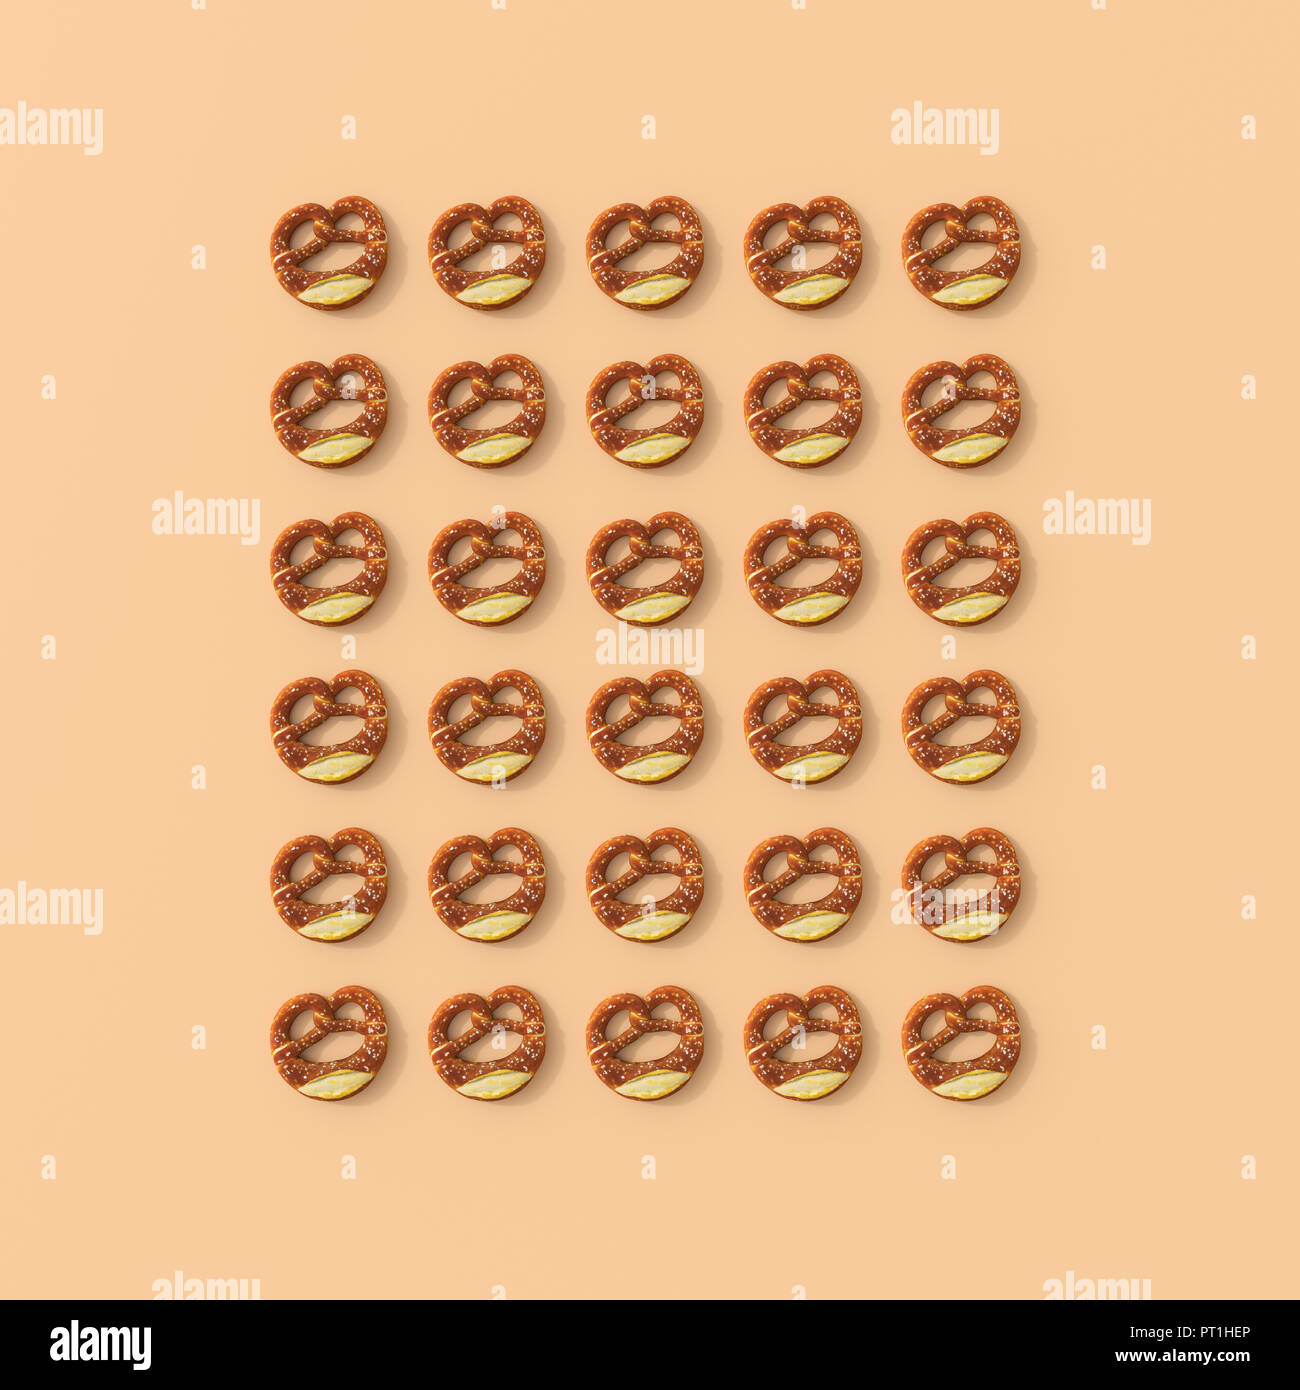 3D rendering, Rows of pretzels on orange background Stock Photo